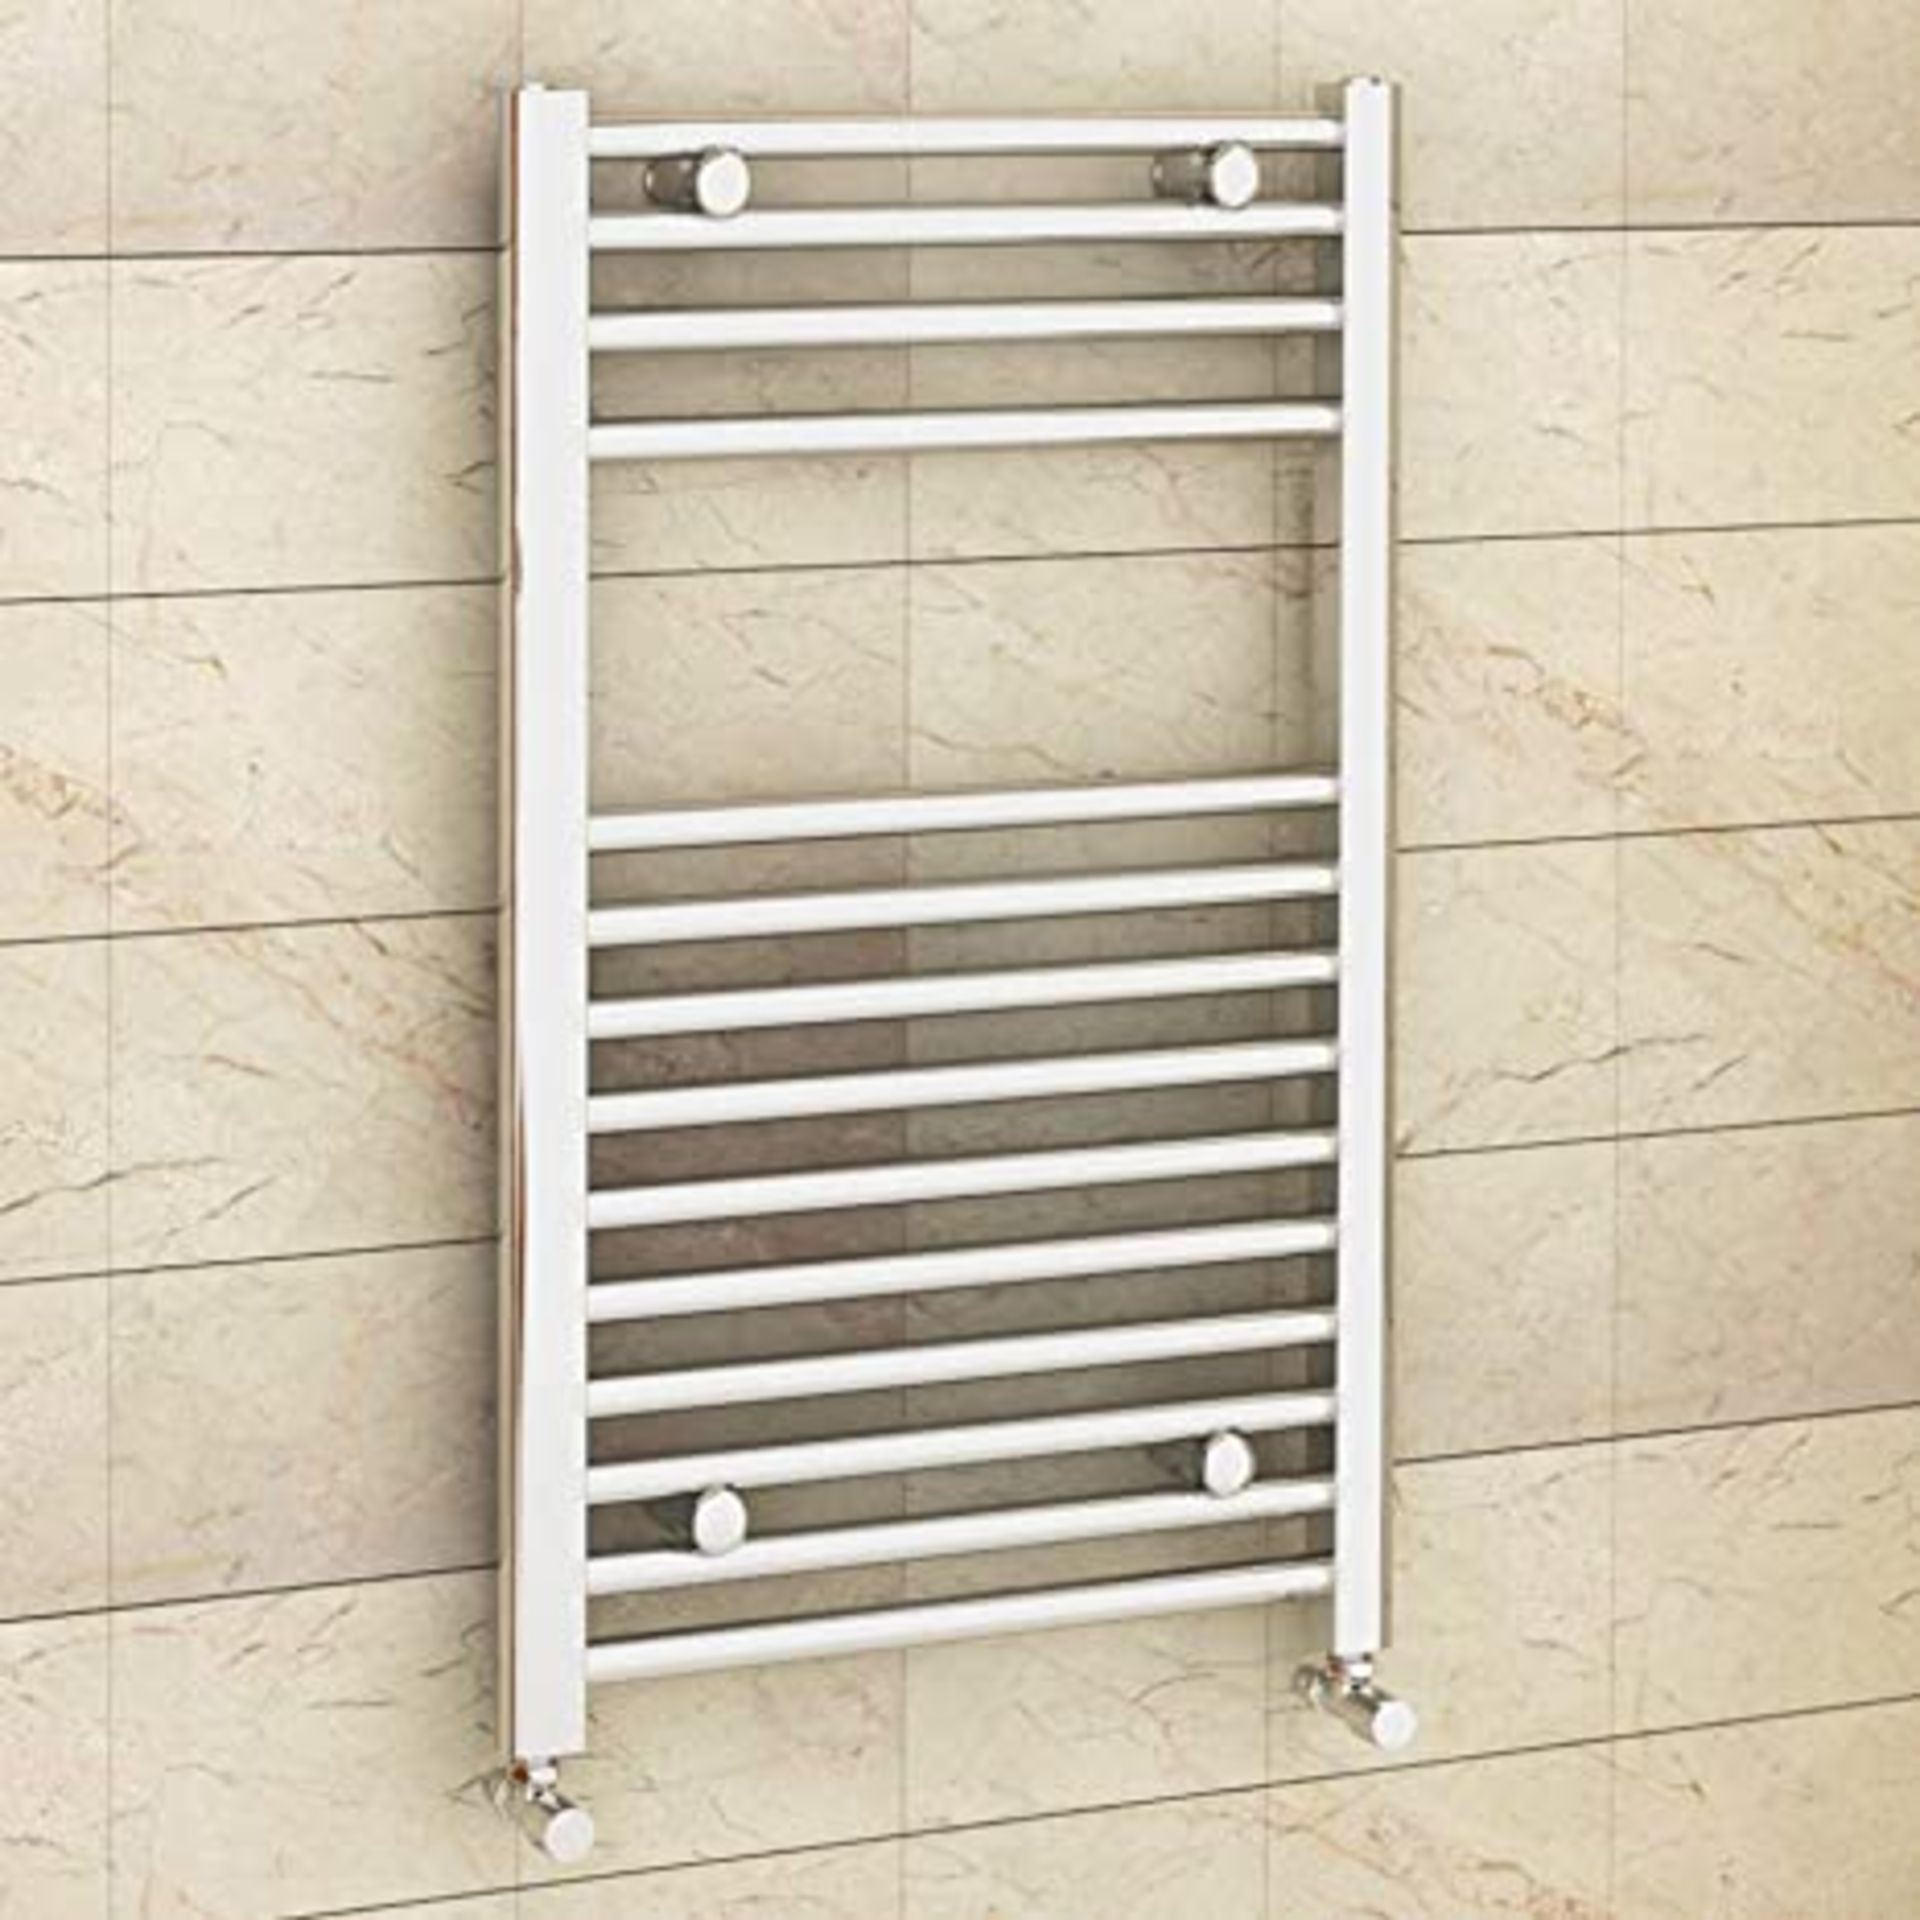 (SP139) 800 x 500mm (H x W) Bathroom Central Heating Straight Ladder Towel Rail Radiator - Chrome